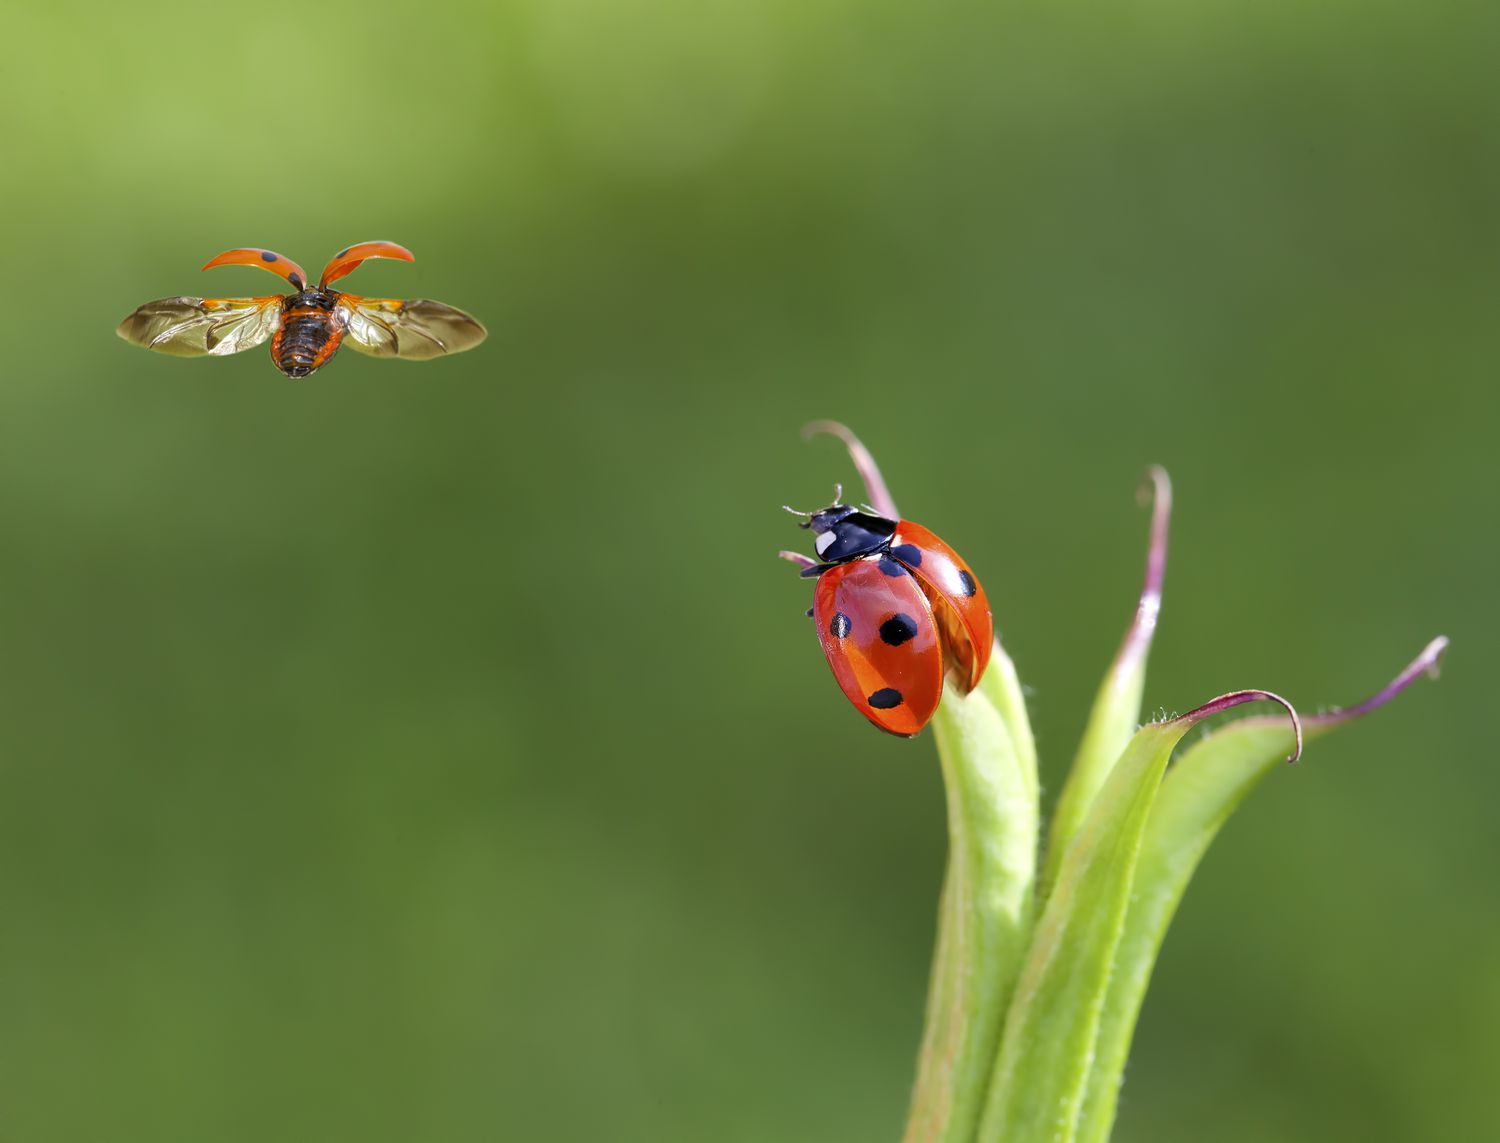 Two ladybirds